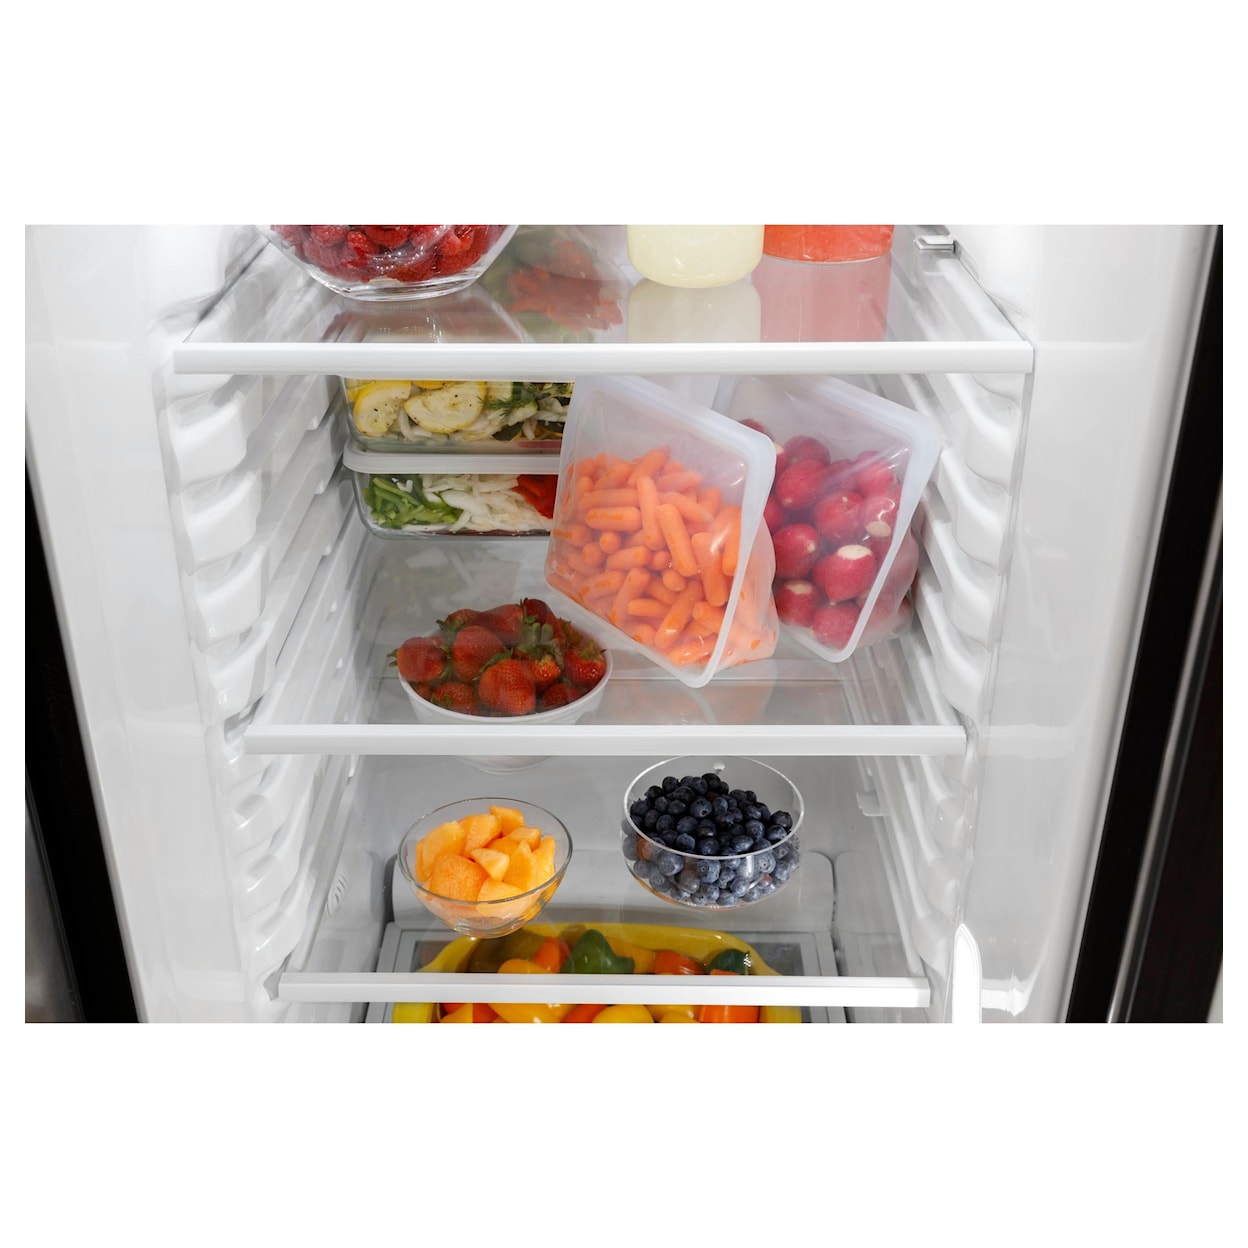 GE Appliances Refrigerators Side By Side Freestanding Refrigerator